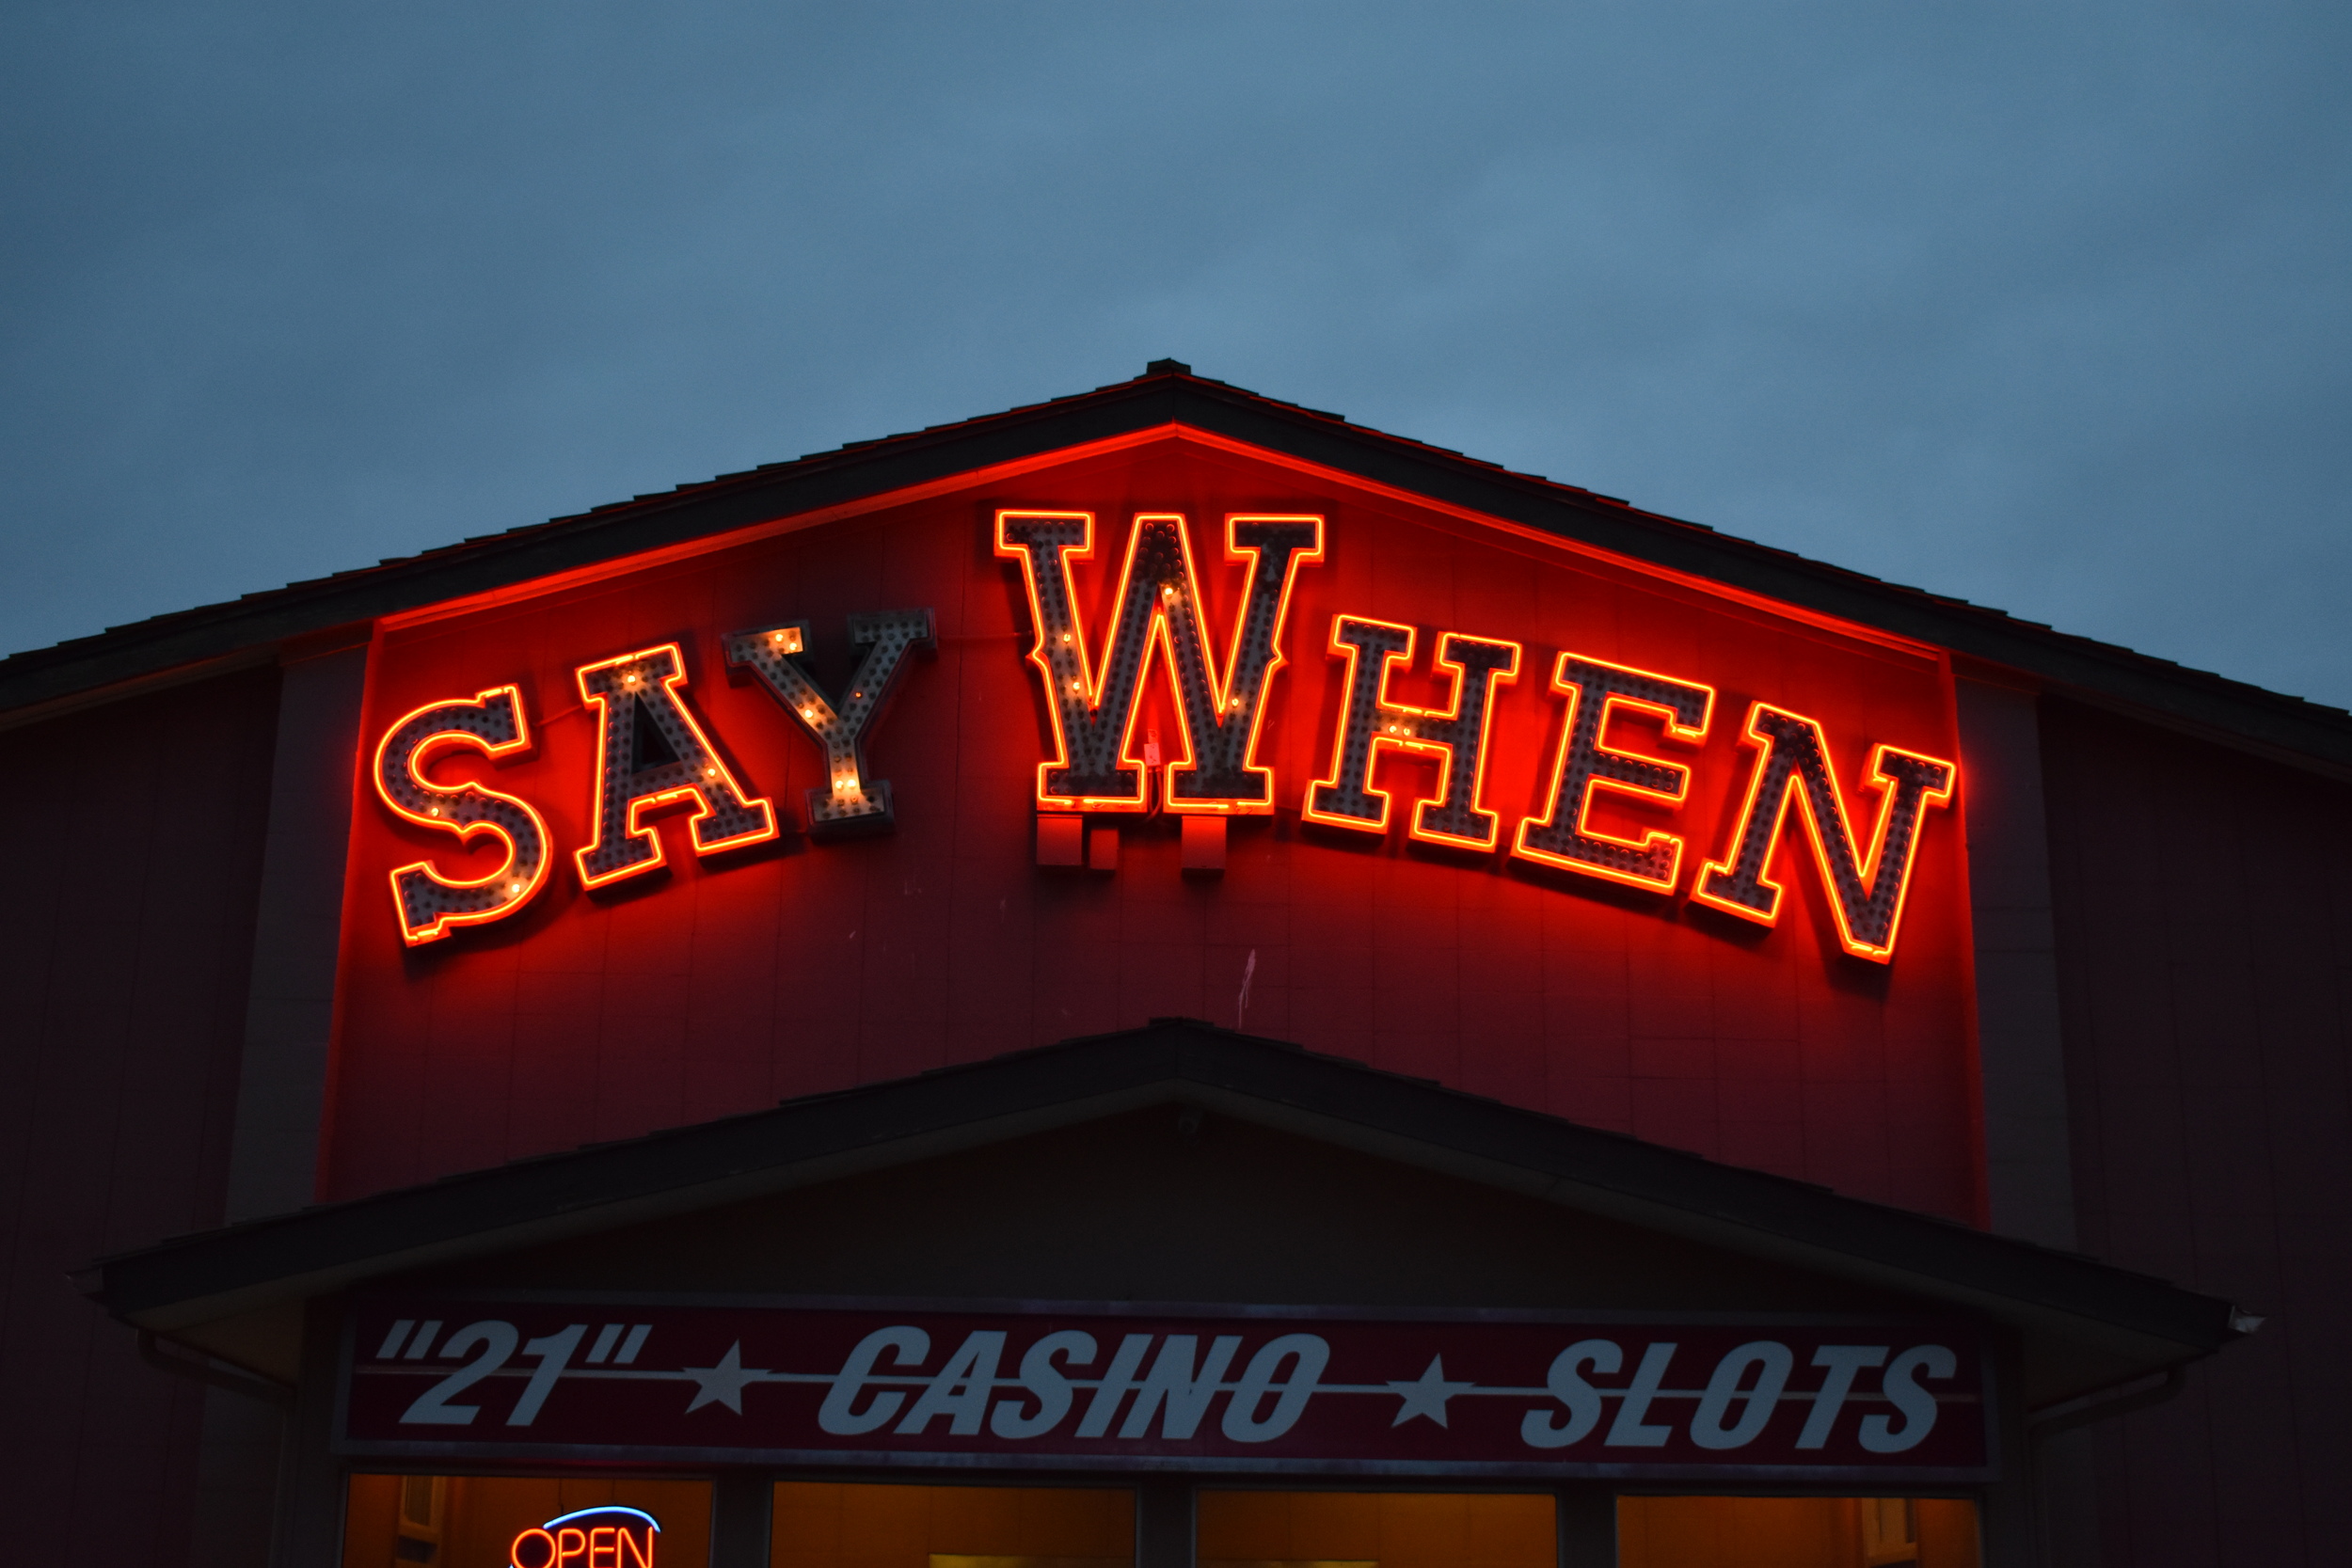 Say When Casino wall mounted signs, McDermitt, Nevada